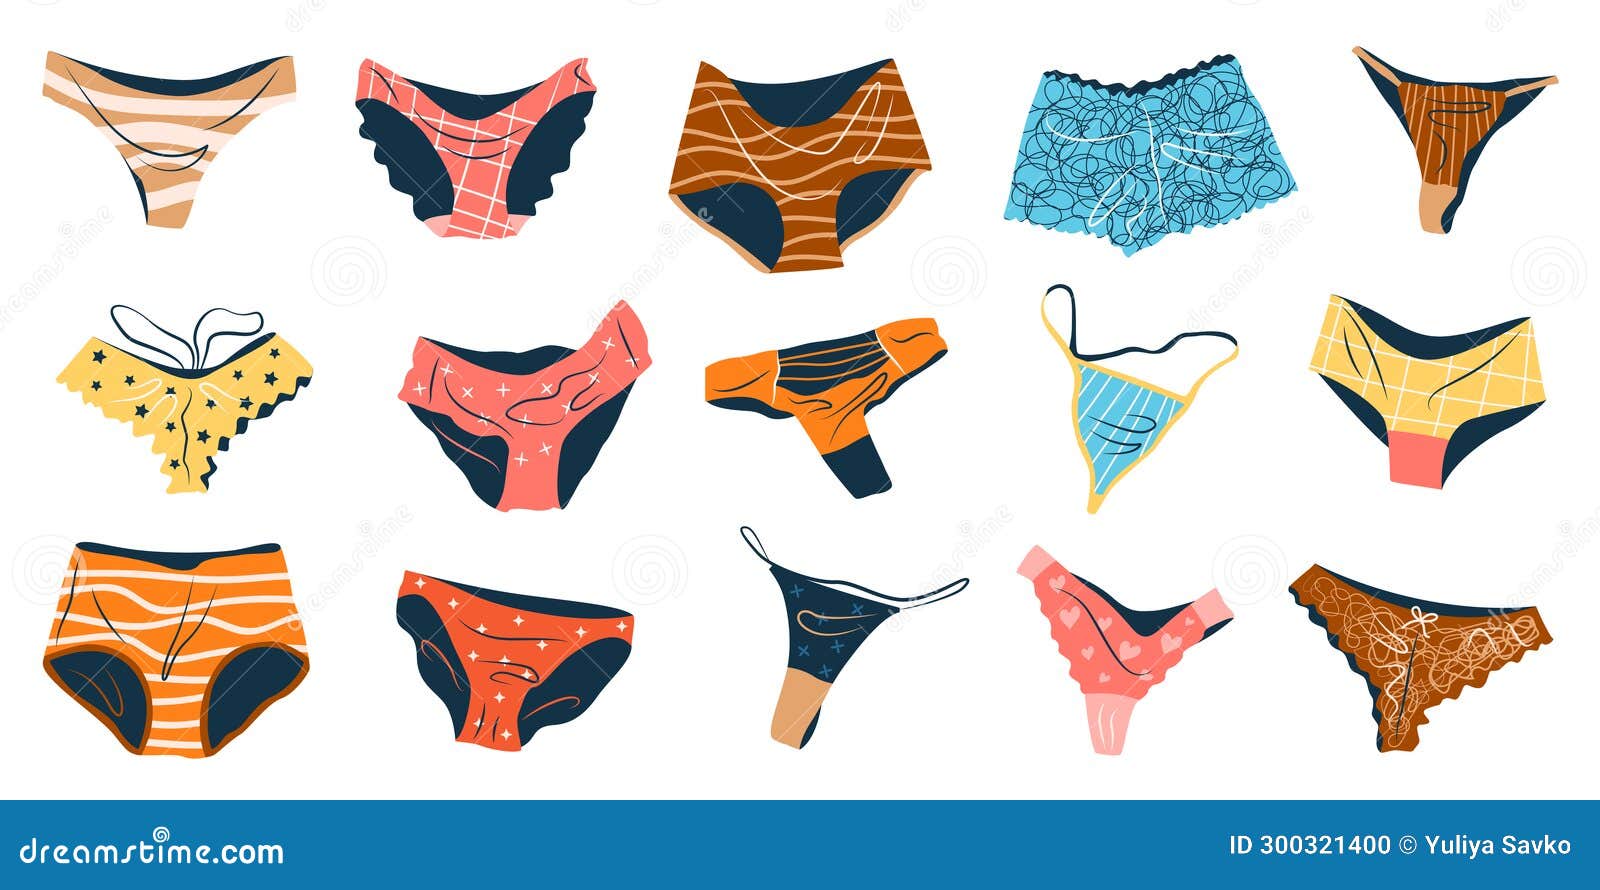 Set of Lingerie - Training Bra and Cheeky Thongs Panties Technical Fashion  Illustration. Flat Swimwear Brassiere Knicker Stock Vector - Illustration  of bathing, beauty: 227637493